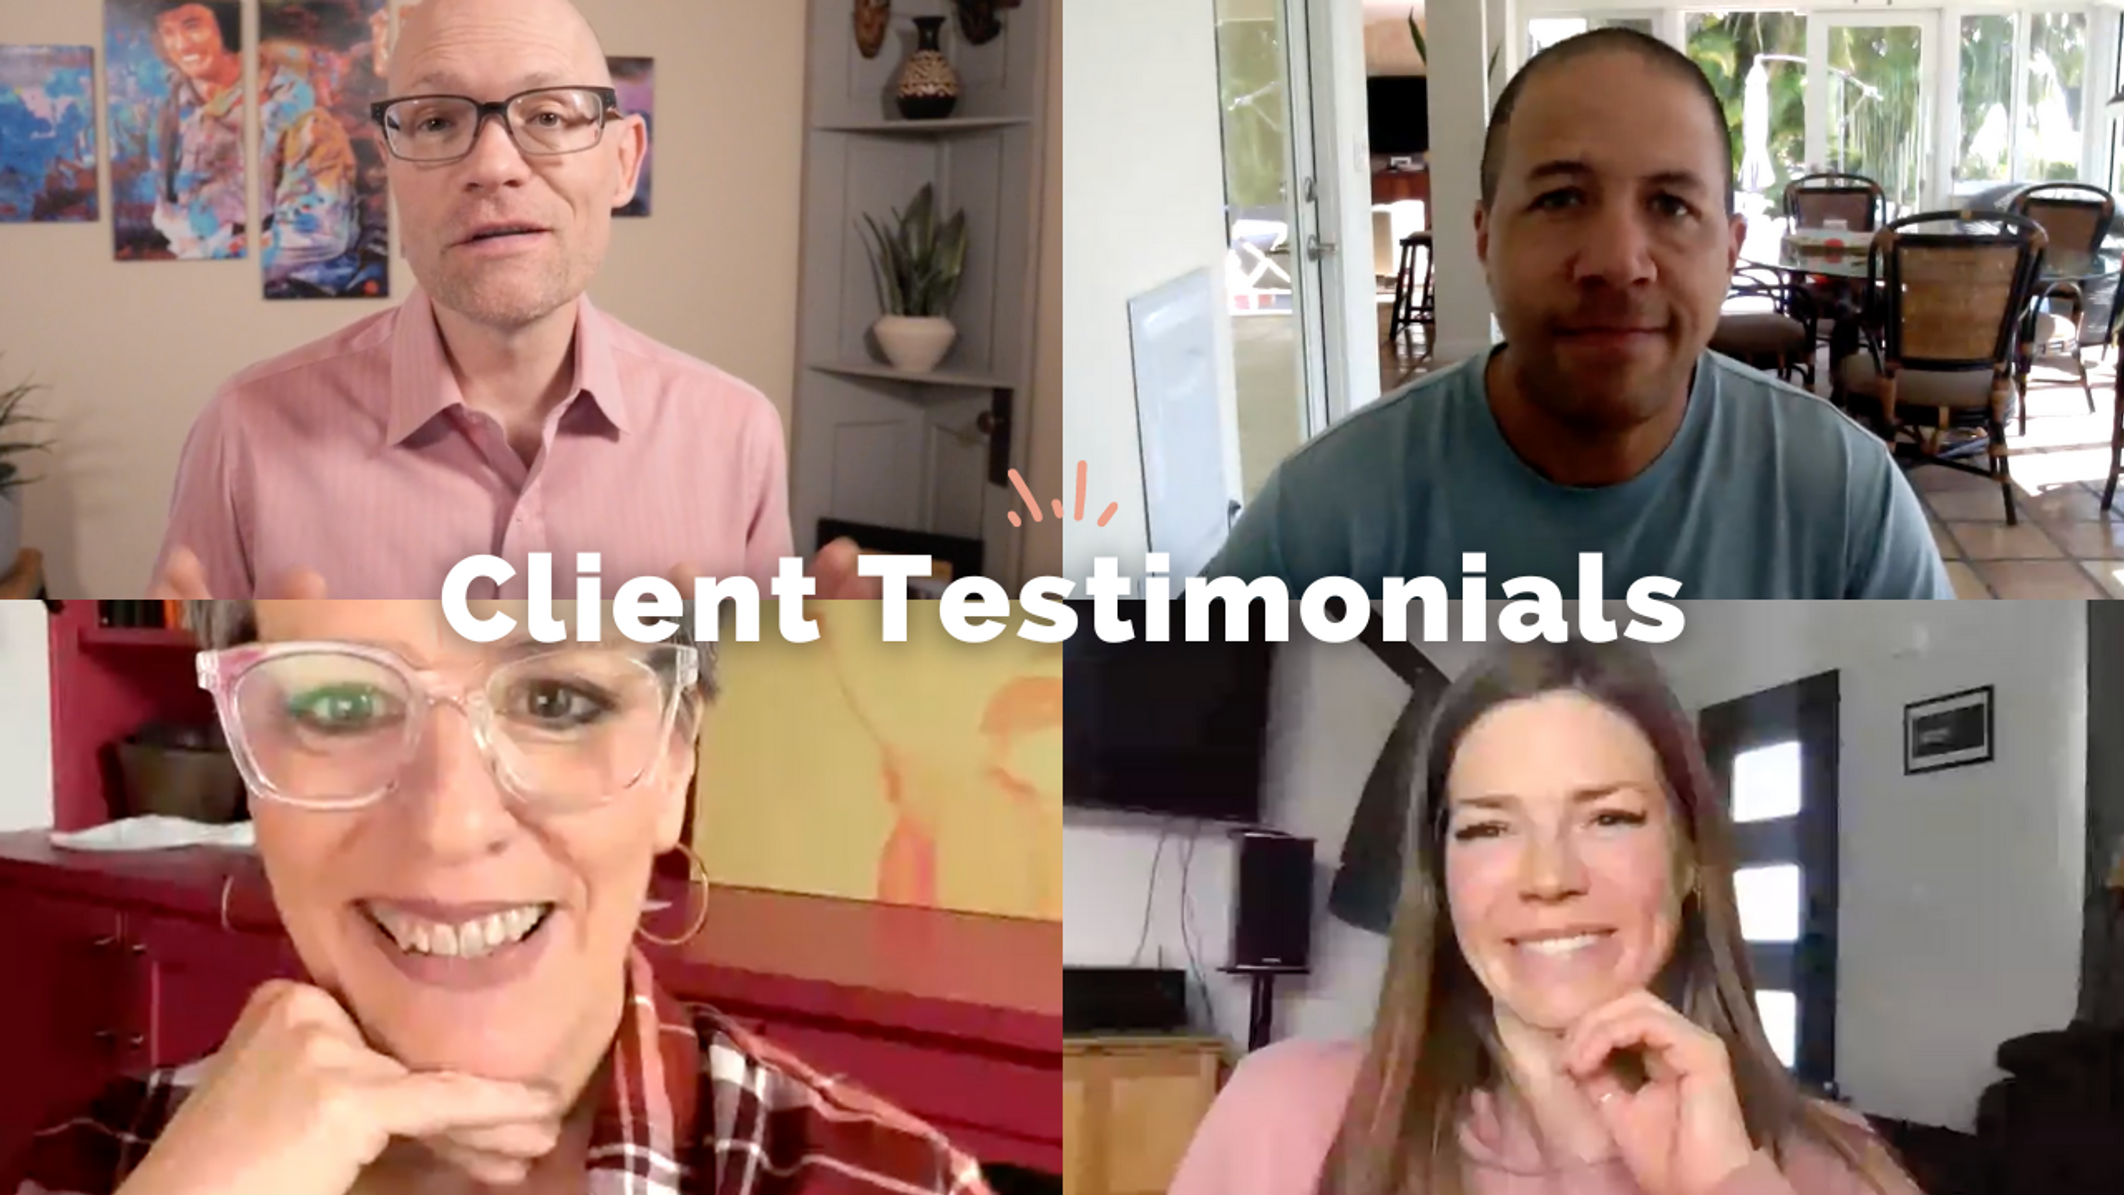 Client Testimonial Videos